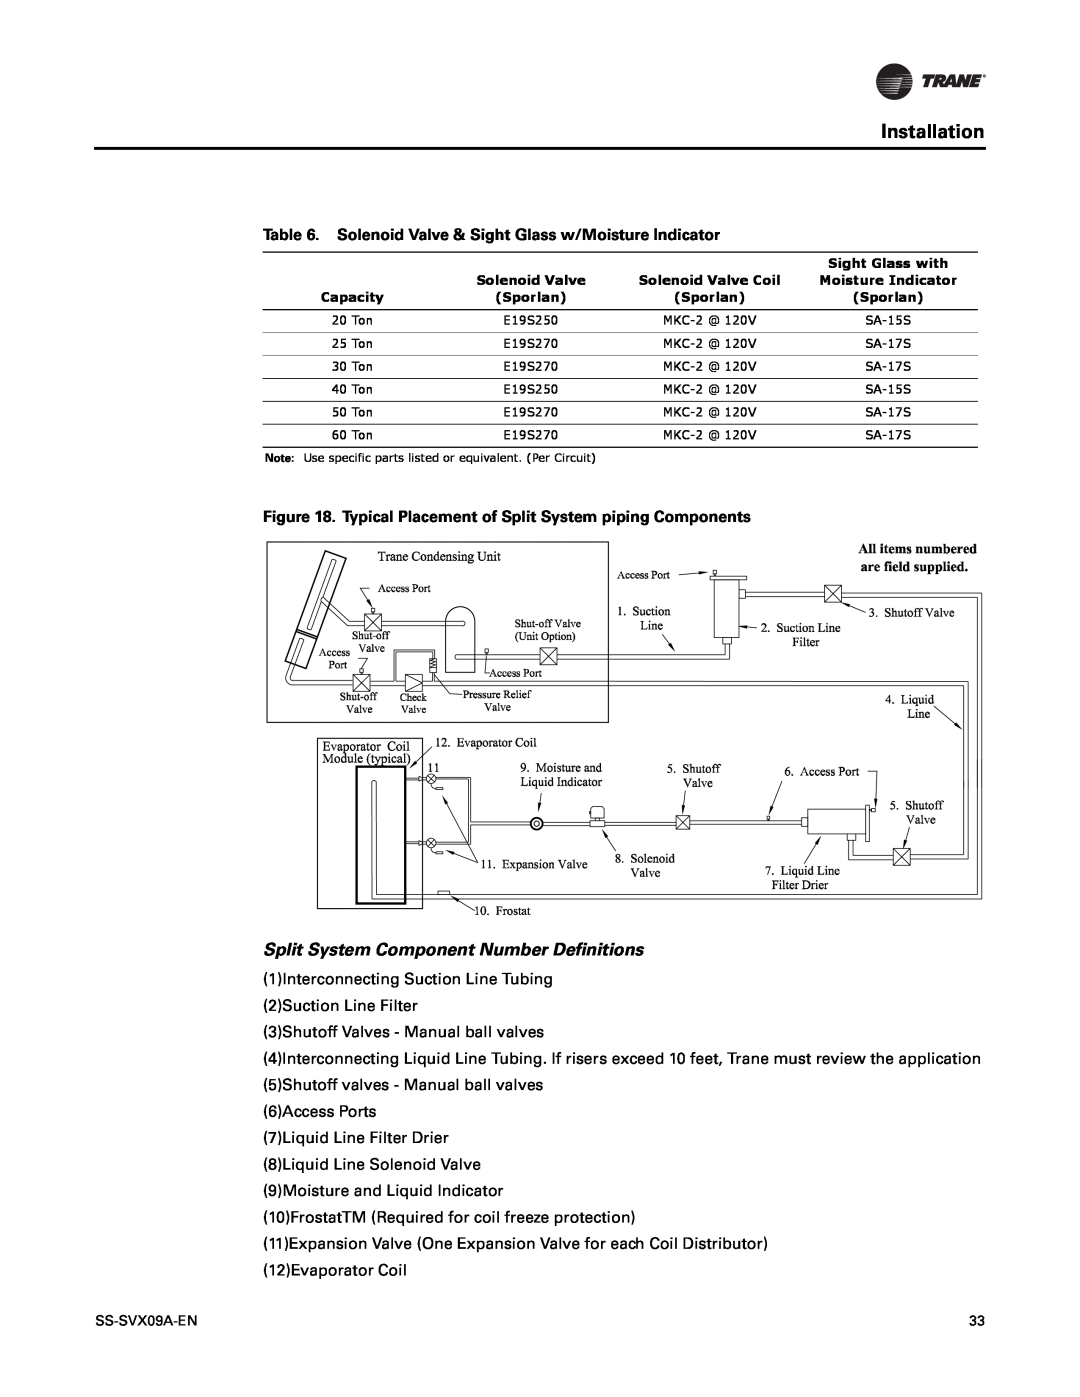 Trane RAUC-C20, RAUC-C50, RAUC-C30, RAUC-C60, RAUC-C40, RAUC-C25 manual Installation, Split System Component Number Definitions 